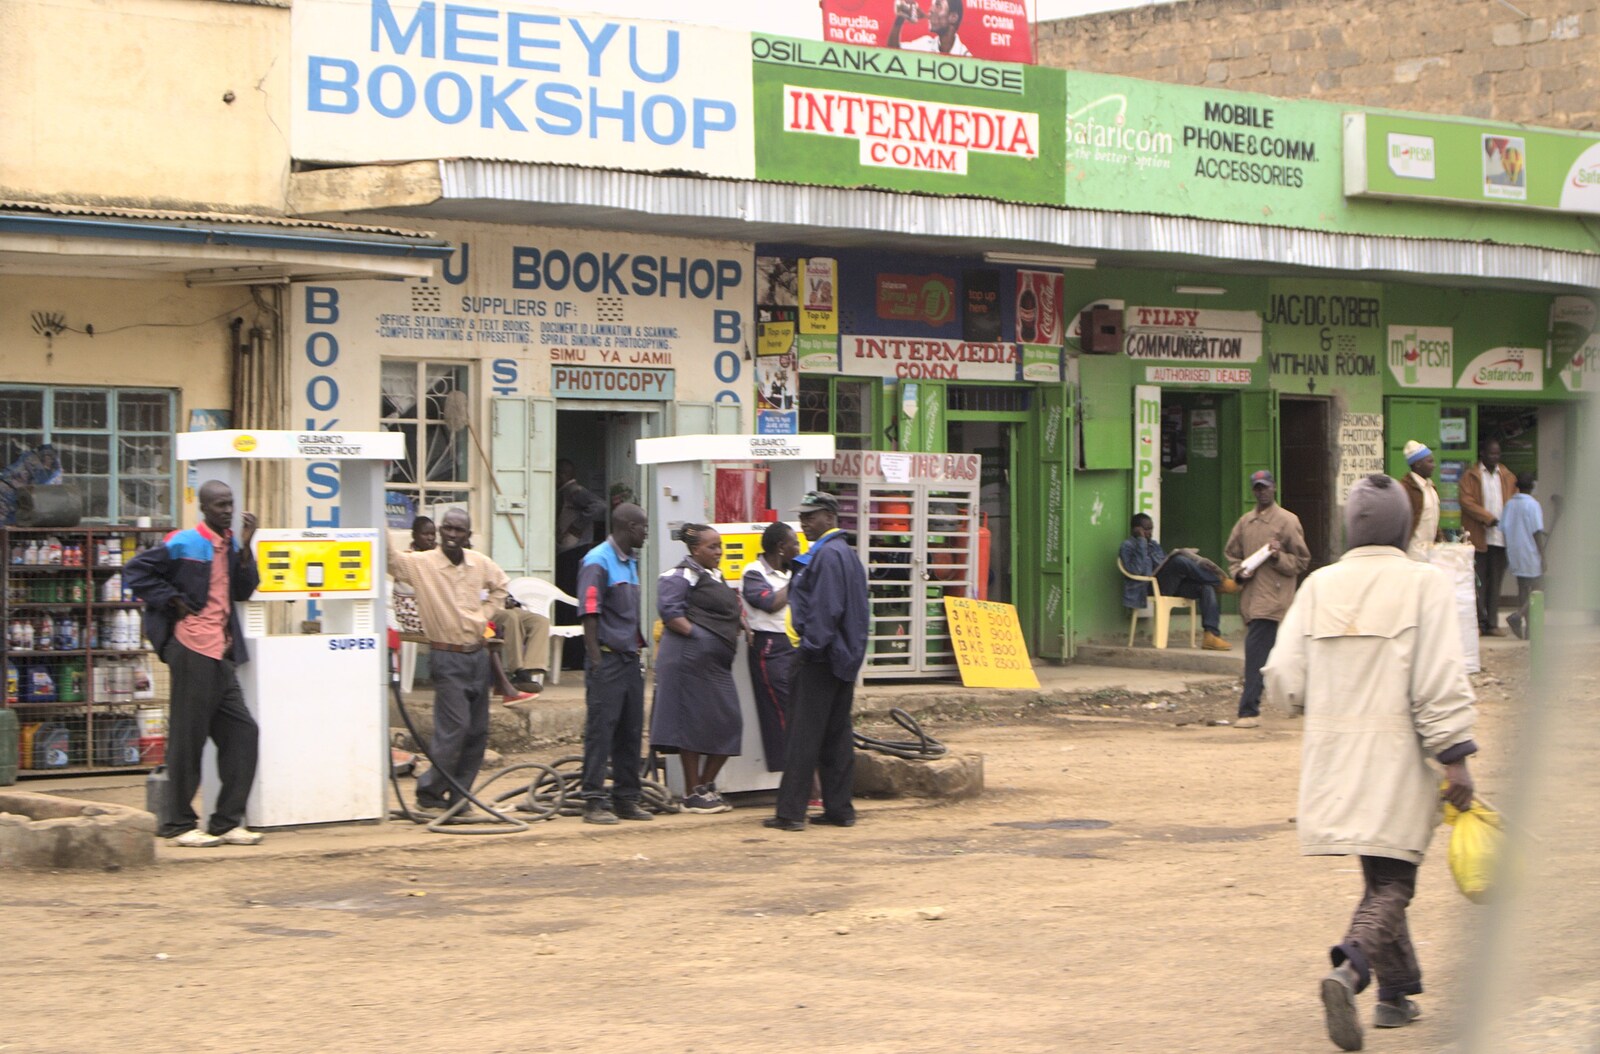 Narok to Naivasha and Hell's Gate National Park, Kenya, Africa - 5th November 2010: A petrol station by the Meeyu Bookshop